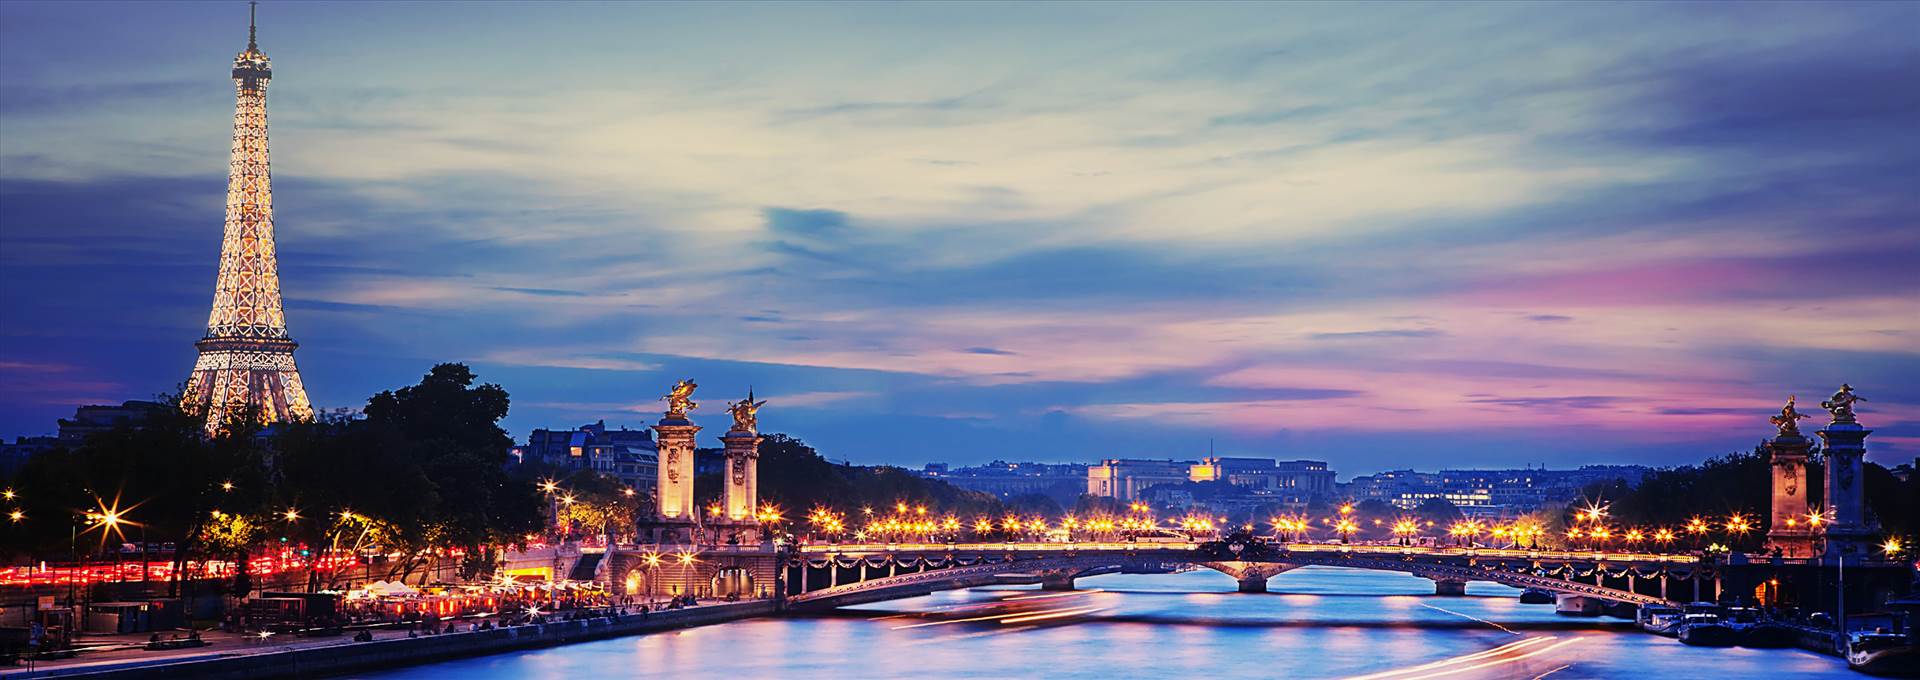 Paris France.jpg  by essydante